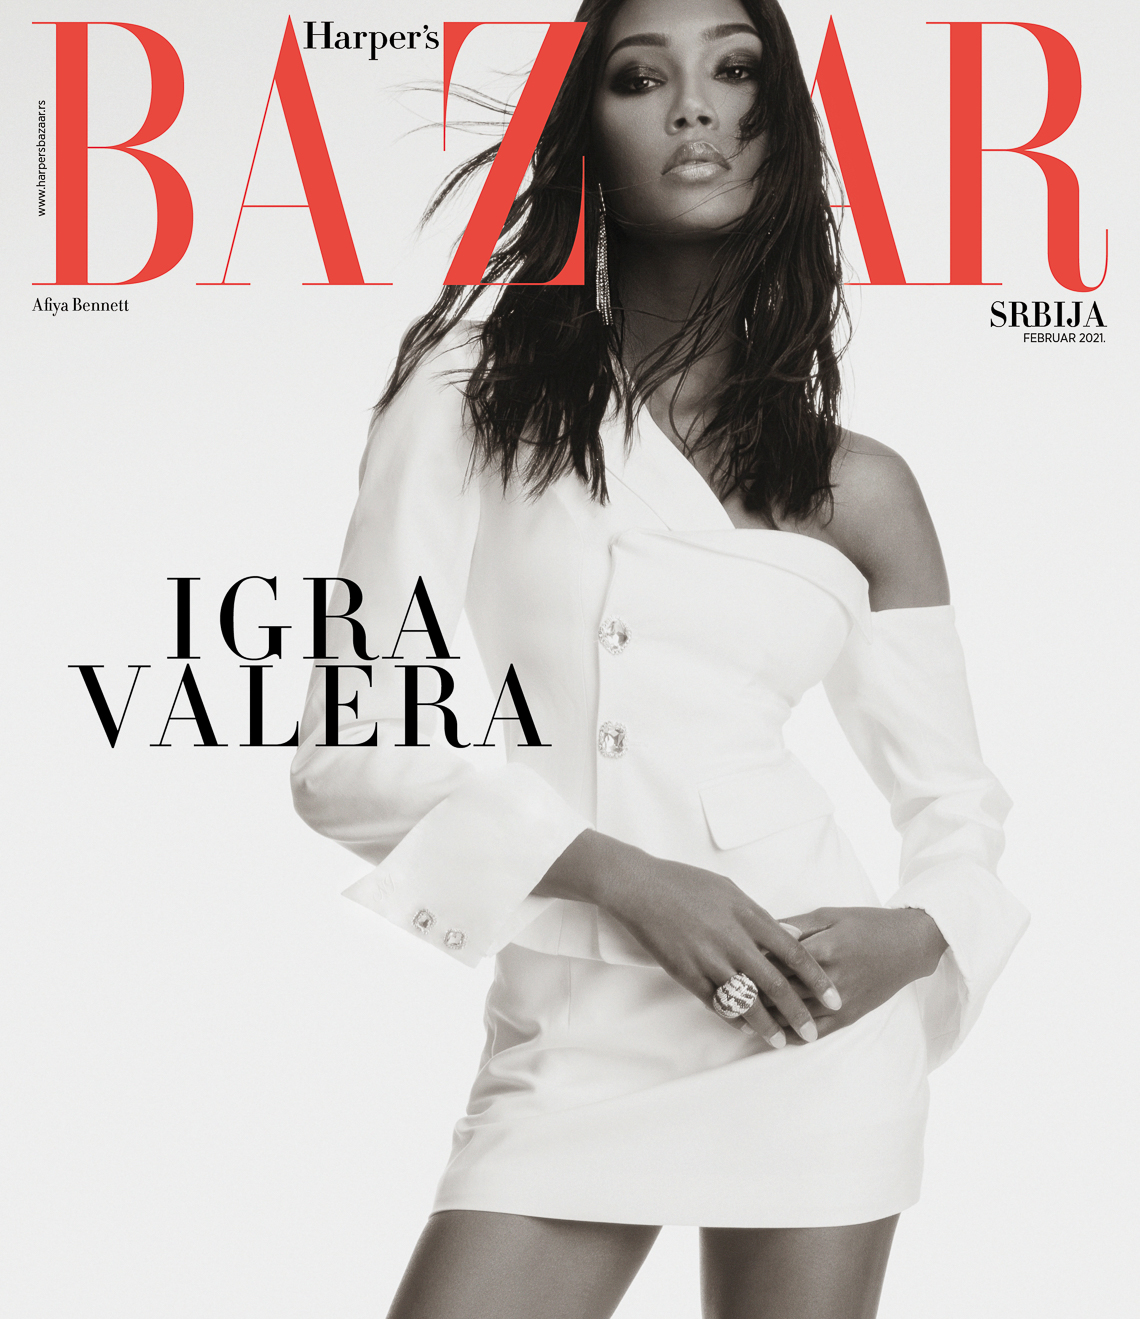 Ace Amir for Harper’s Bazaar Serbia with Afiya Bennett